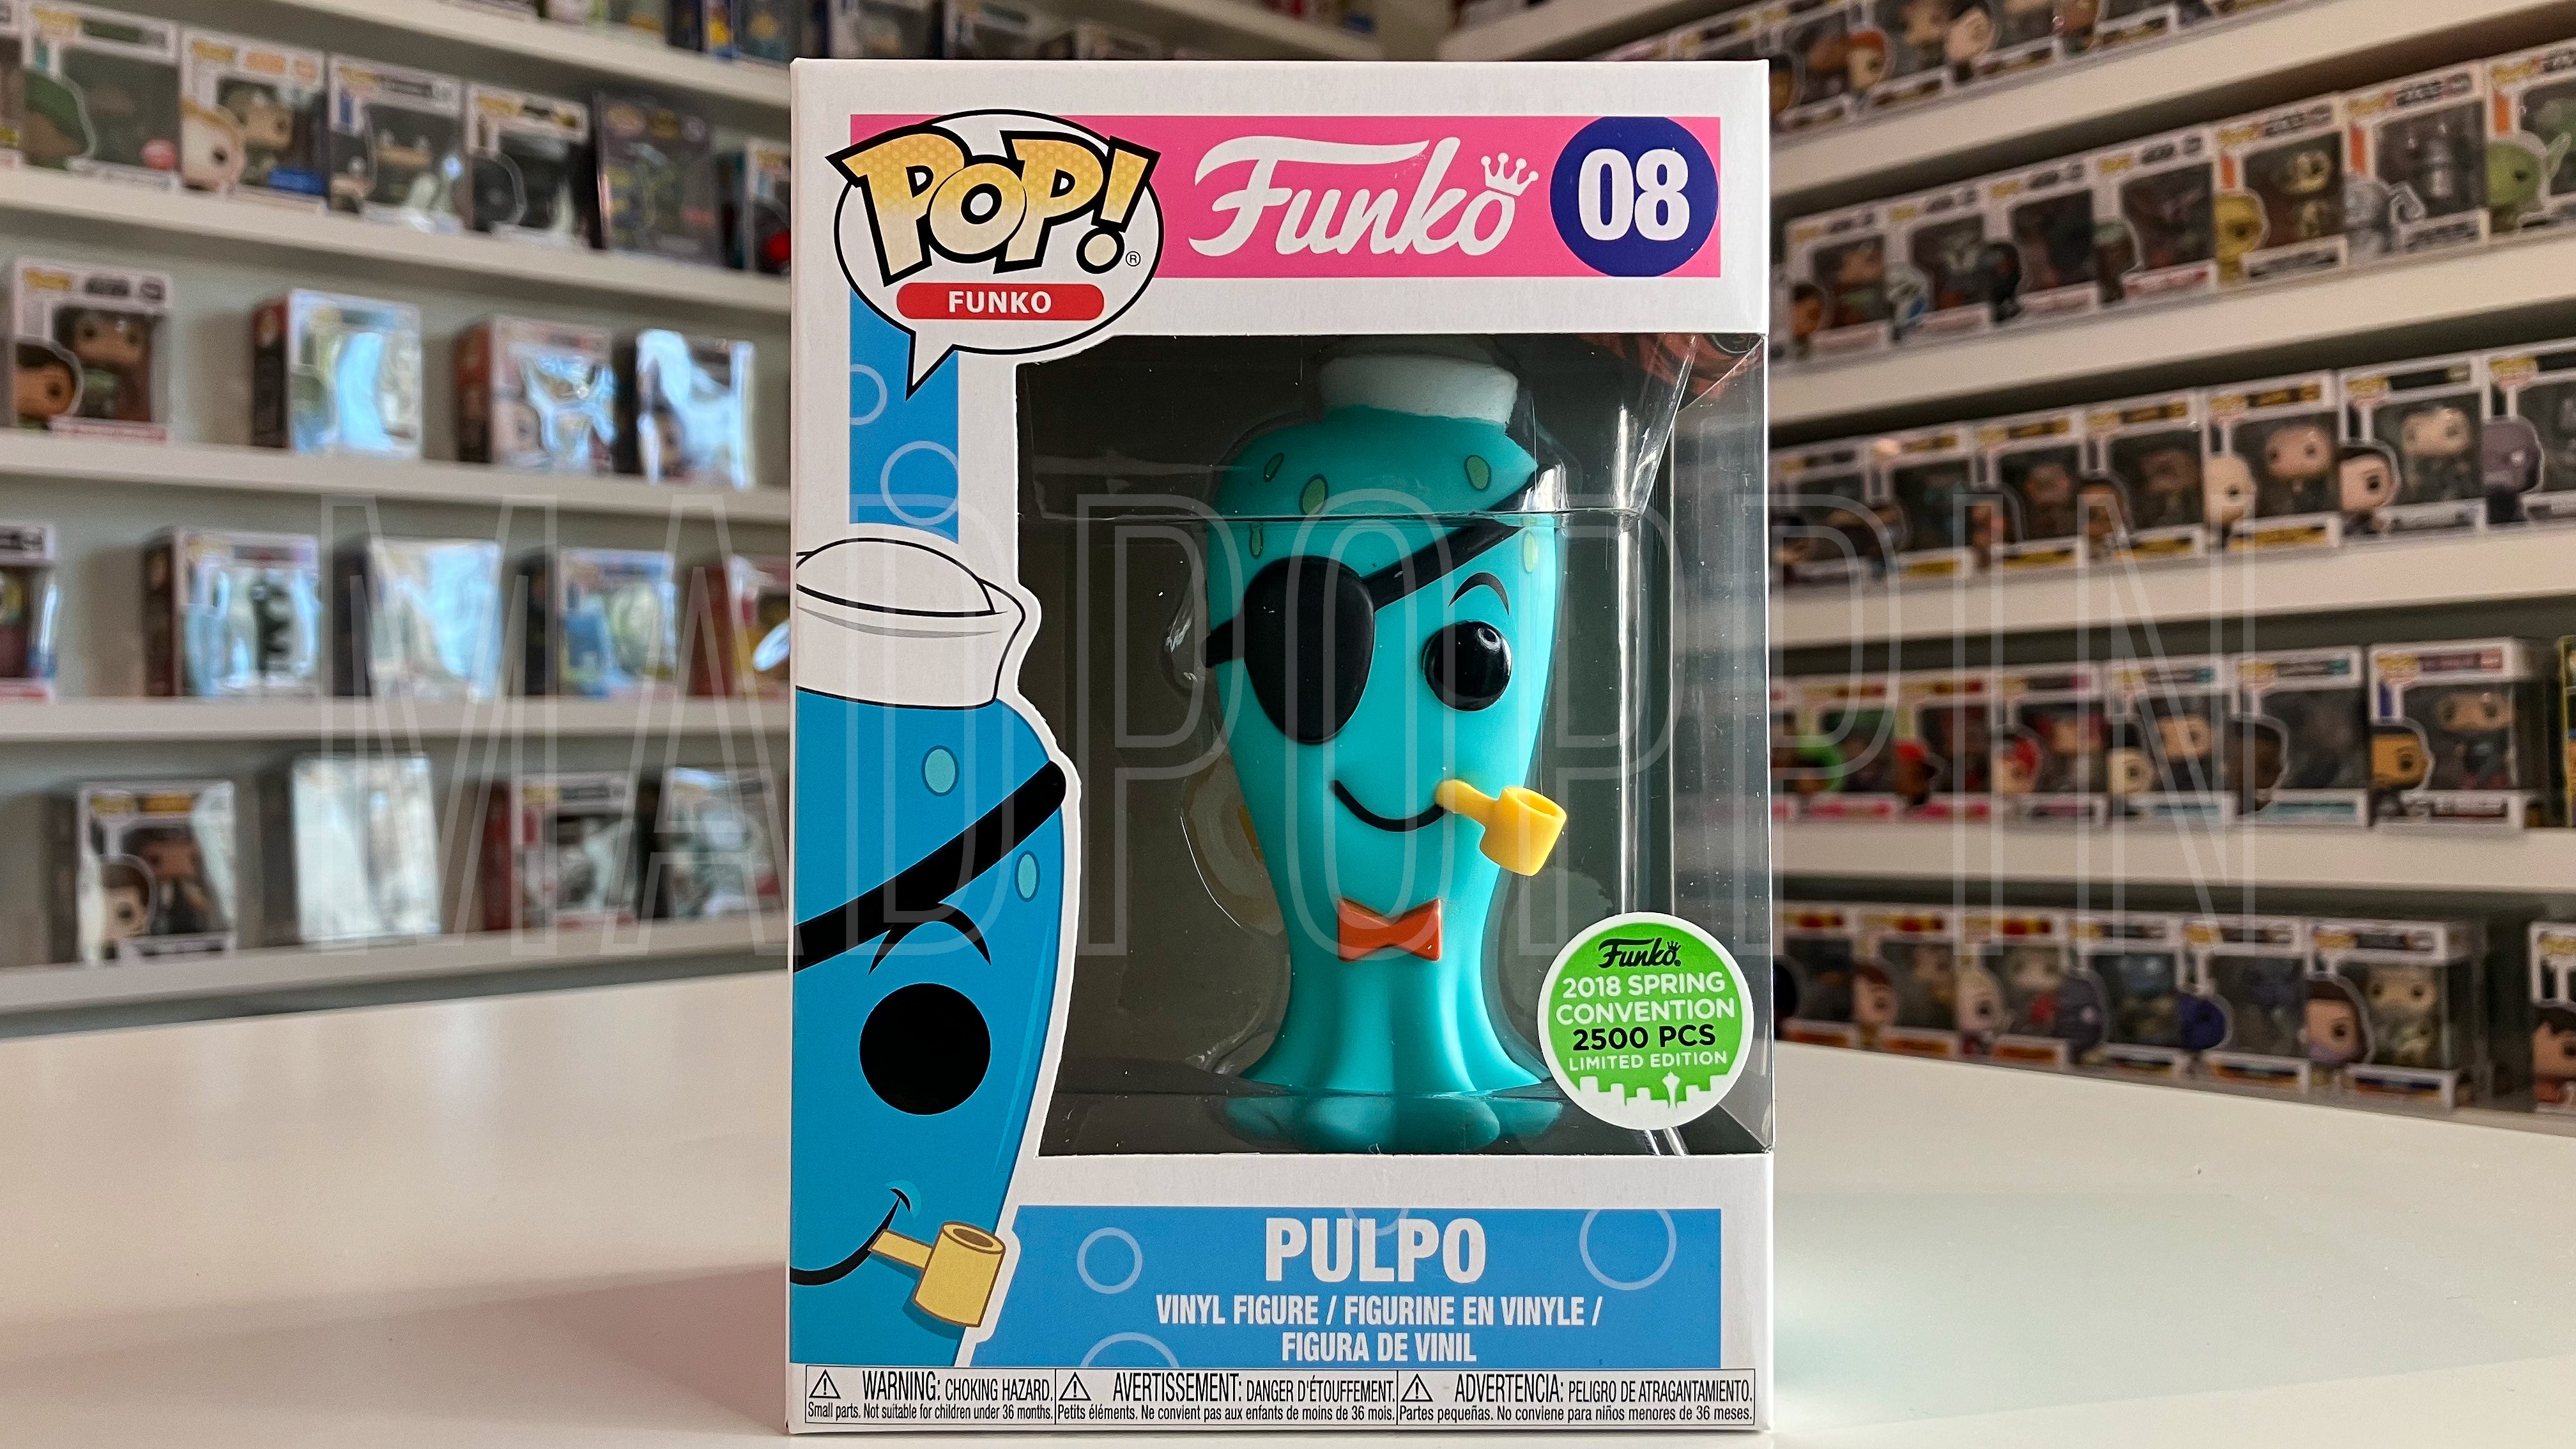 POP! Funko Pulpo Spring Convention ECCC 2018 Limited Edition 2500 #08